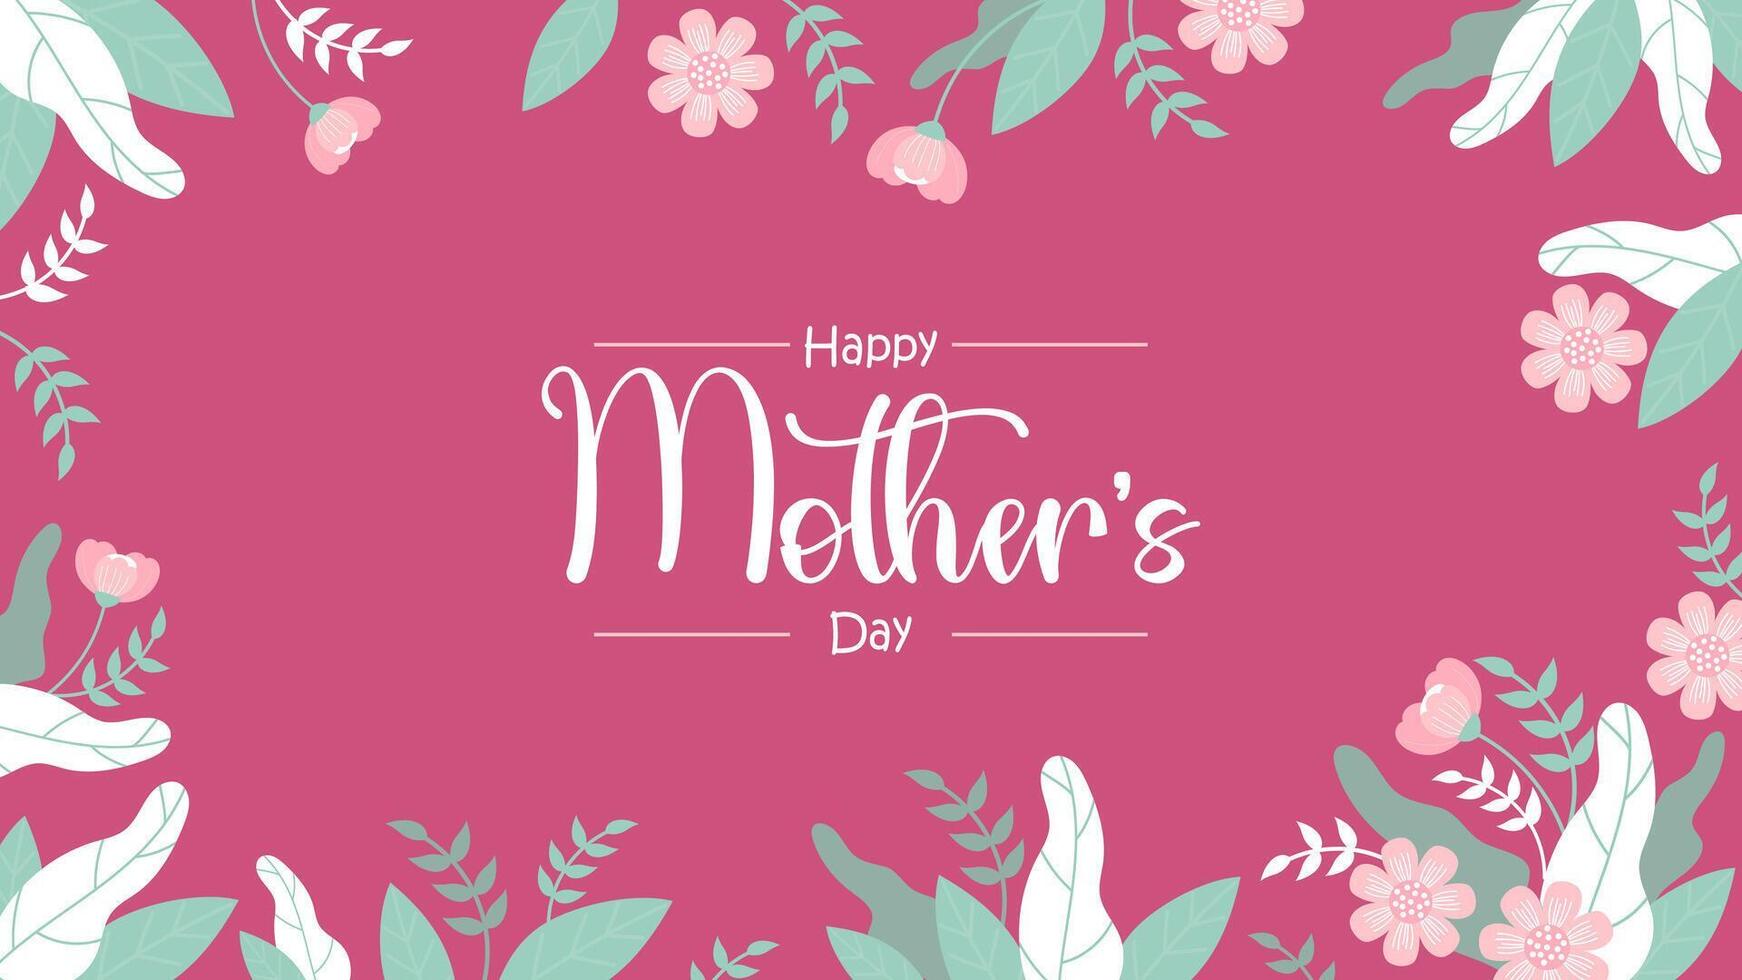 floral bandera contento madres día. rosado flores en magenta antecedentes con Felicidades inscripción. horizontal festivo póster. vector ilustración en plano estilo